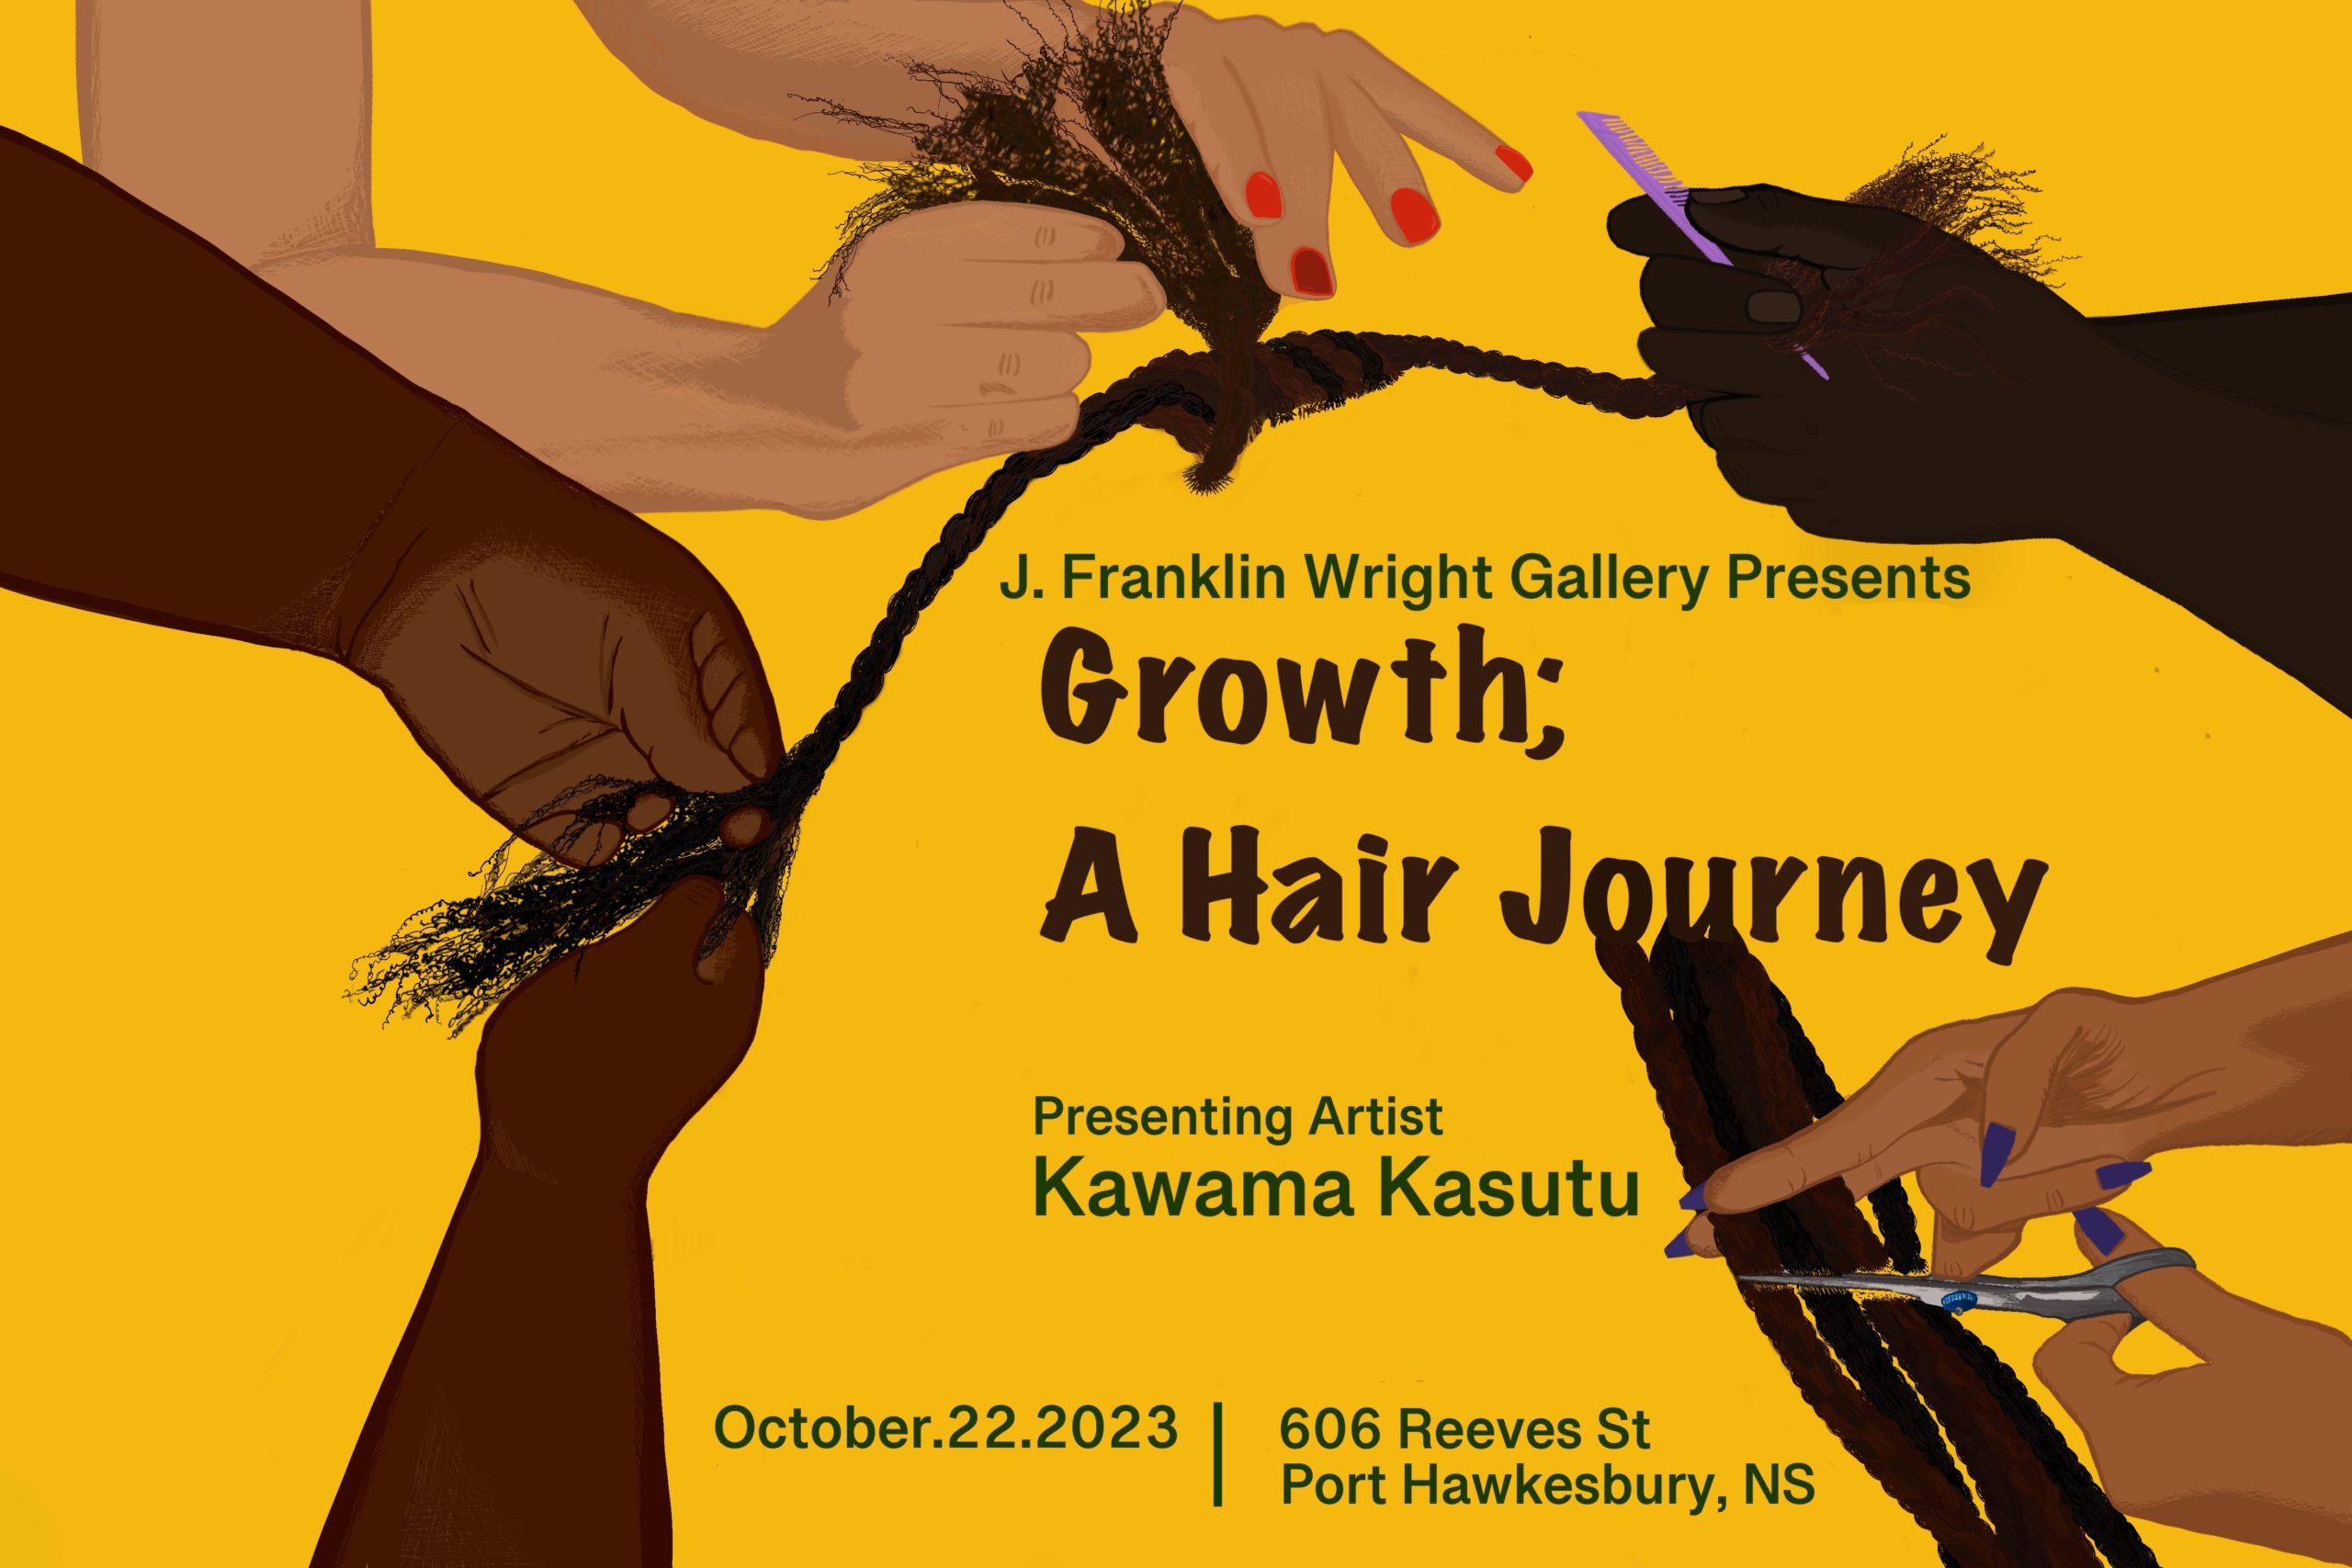 J. Franklin Wright Gallery Presents: Growth: A Hair Journey by Kawama Kasutu